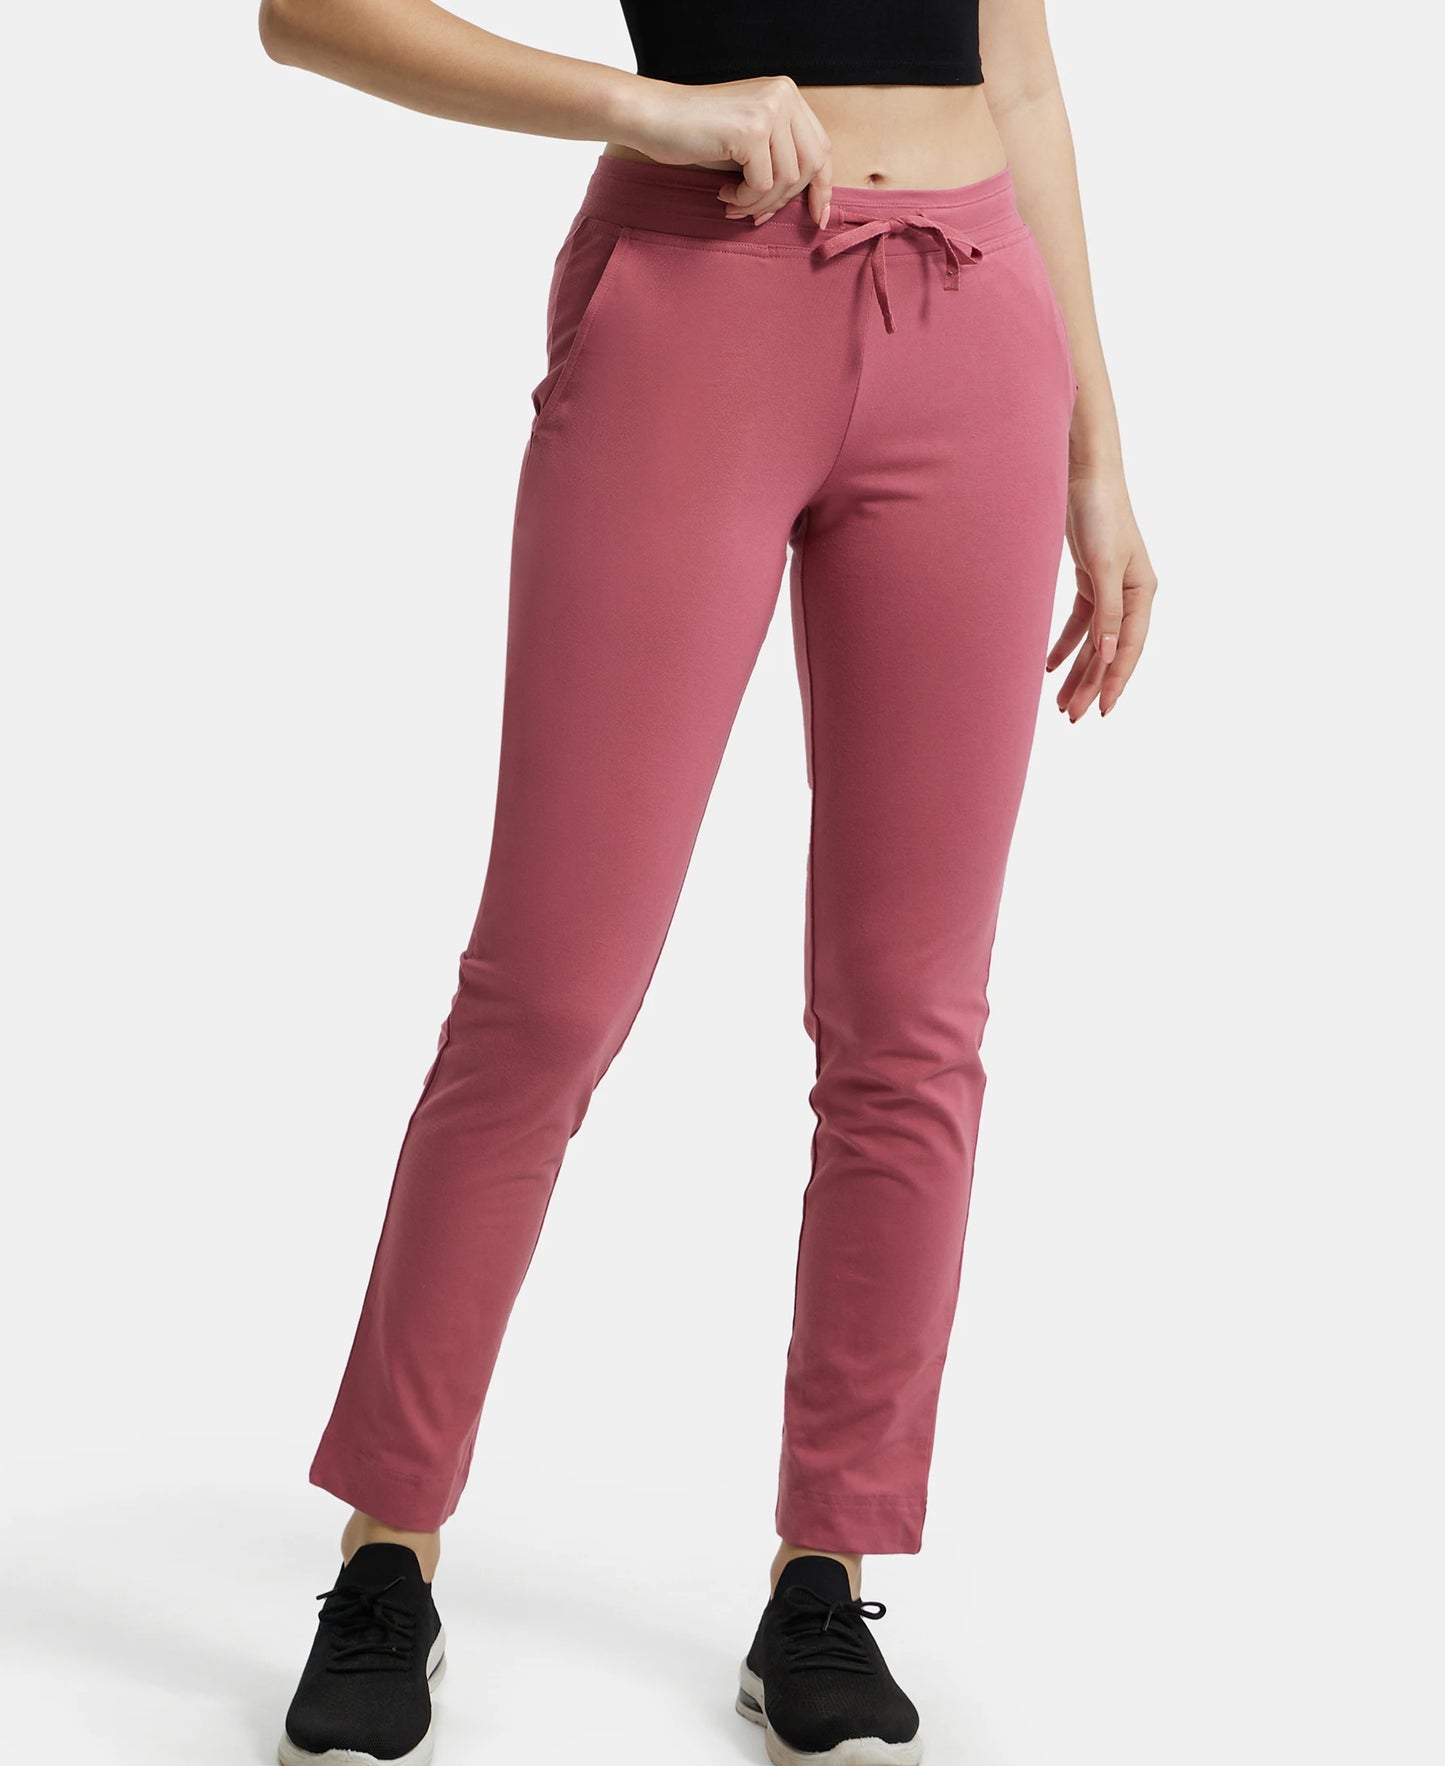 Super Combed Cotton Elastane Slim Fit Trackpants With Side Pockets - Rose Wine-5